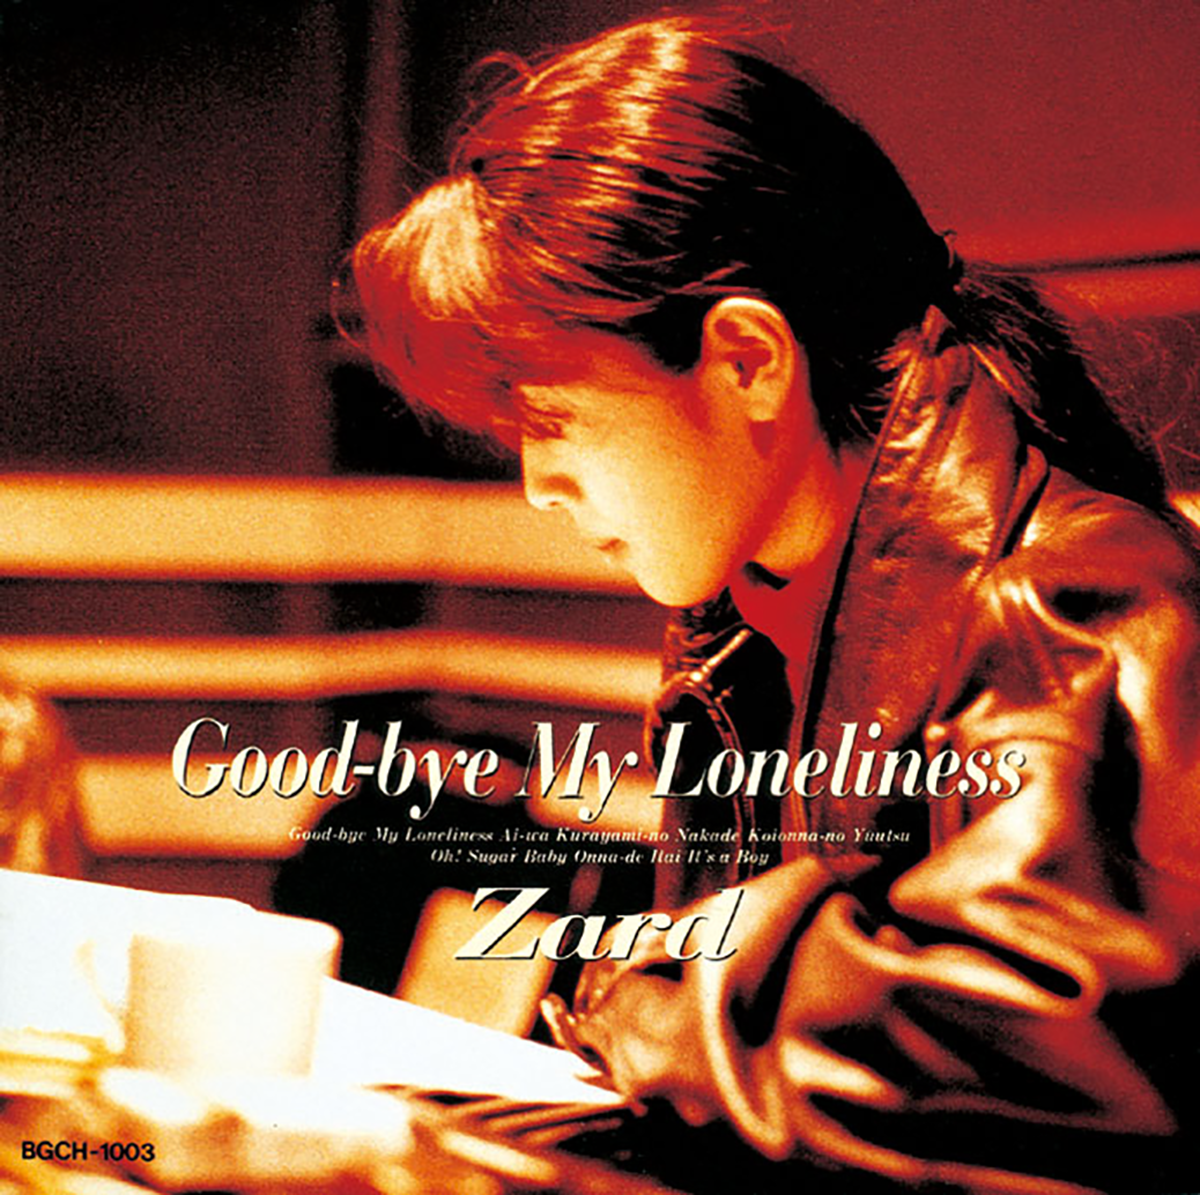 ZARDの1st SINGLE「Good-bye My Loneliness」のジャケット画像